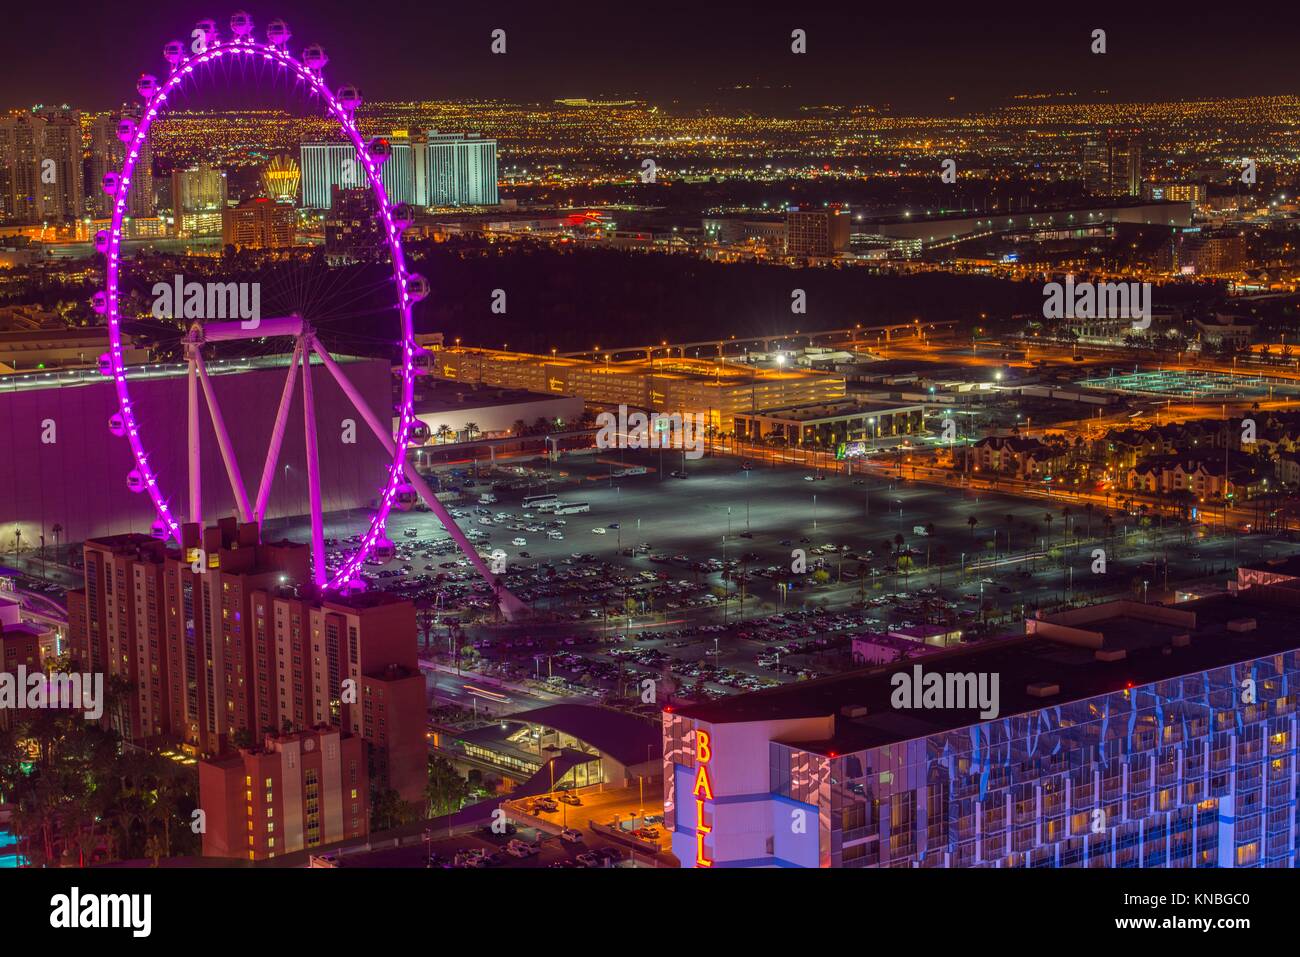 High Roller ferris wheel in Las Vegas at night from the Paris Casino resort hotel Eiffel Tower, Las Vegas, Nevada, USA. Stock Photo